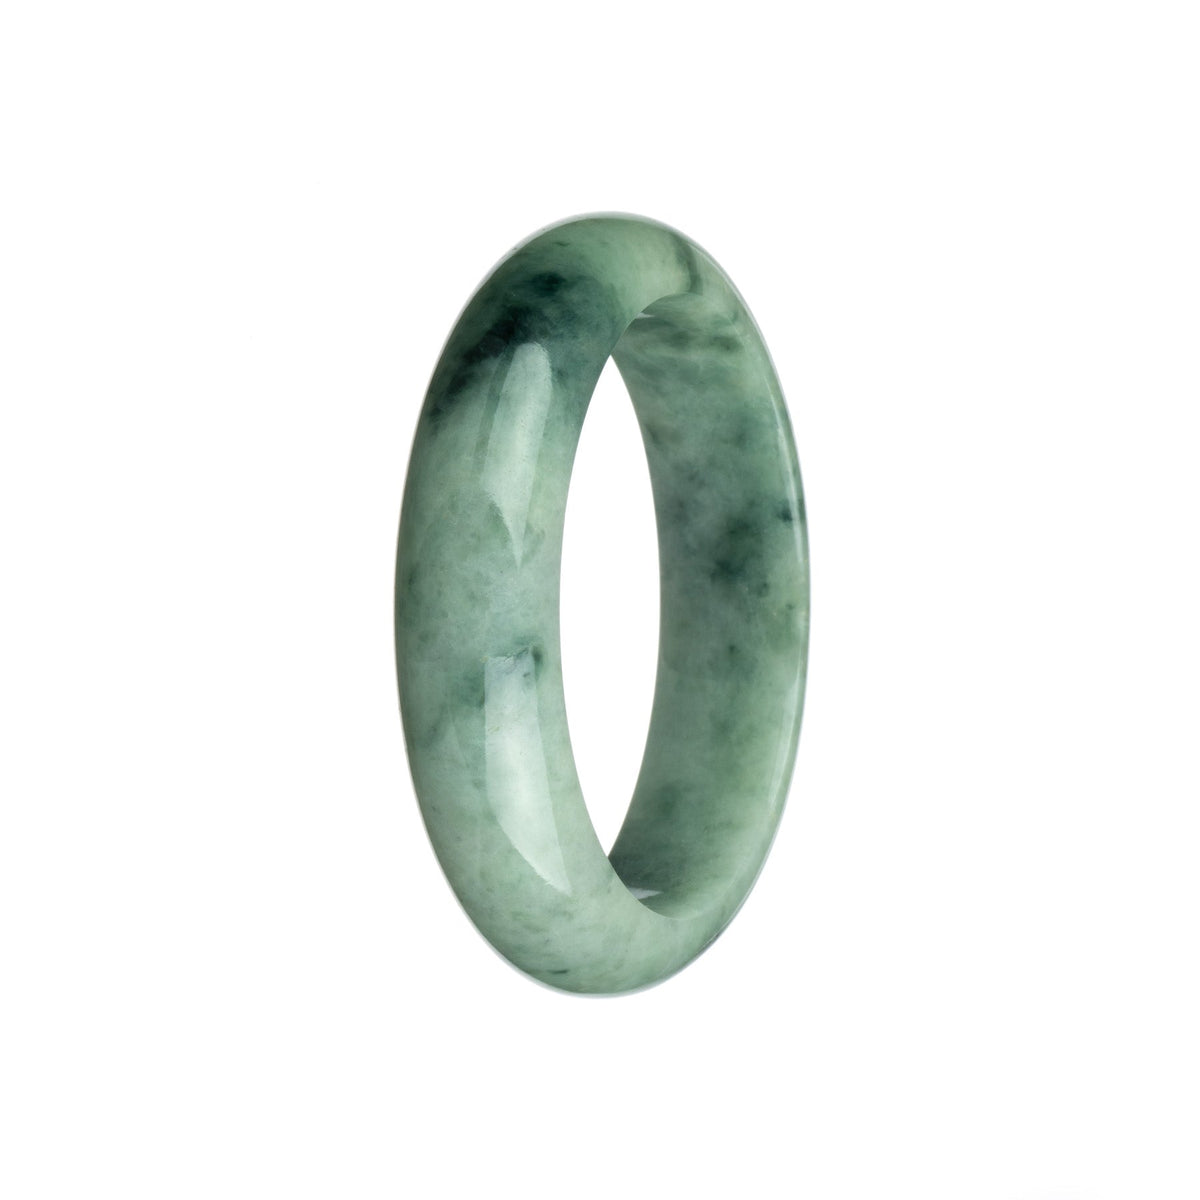 Genuine Natural Pale Green and Dark Green Patterns Traditional Jade Bangle - 56mm Half Moon